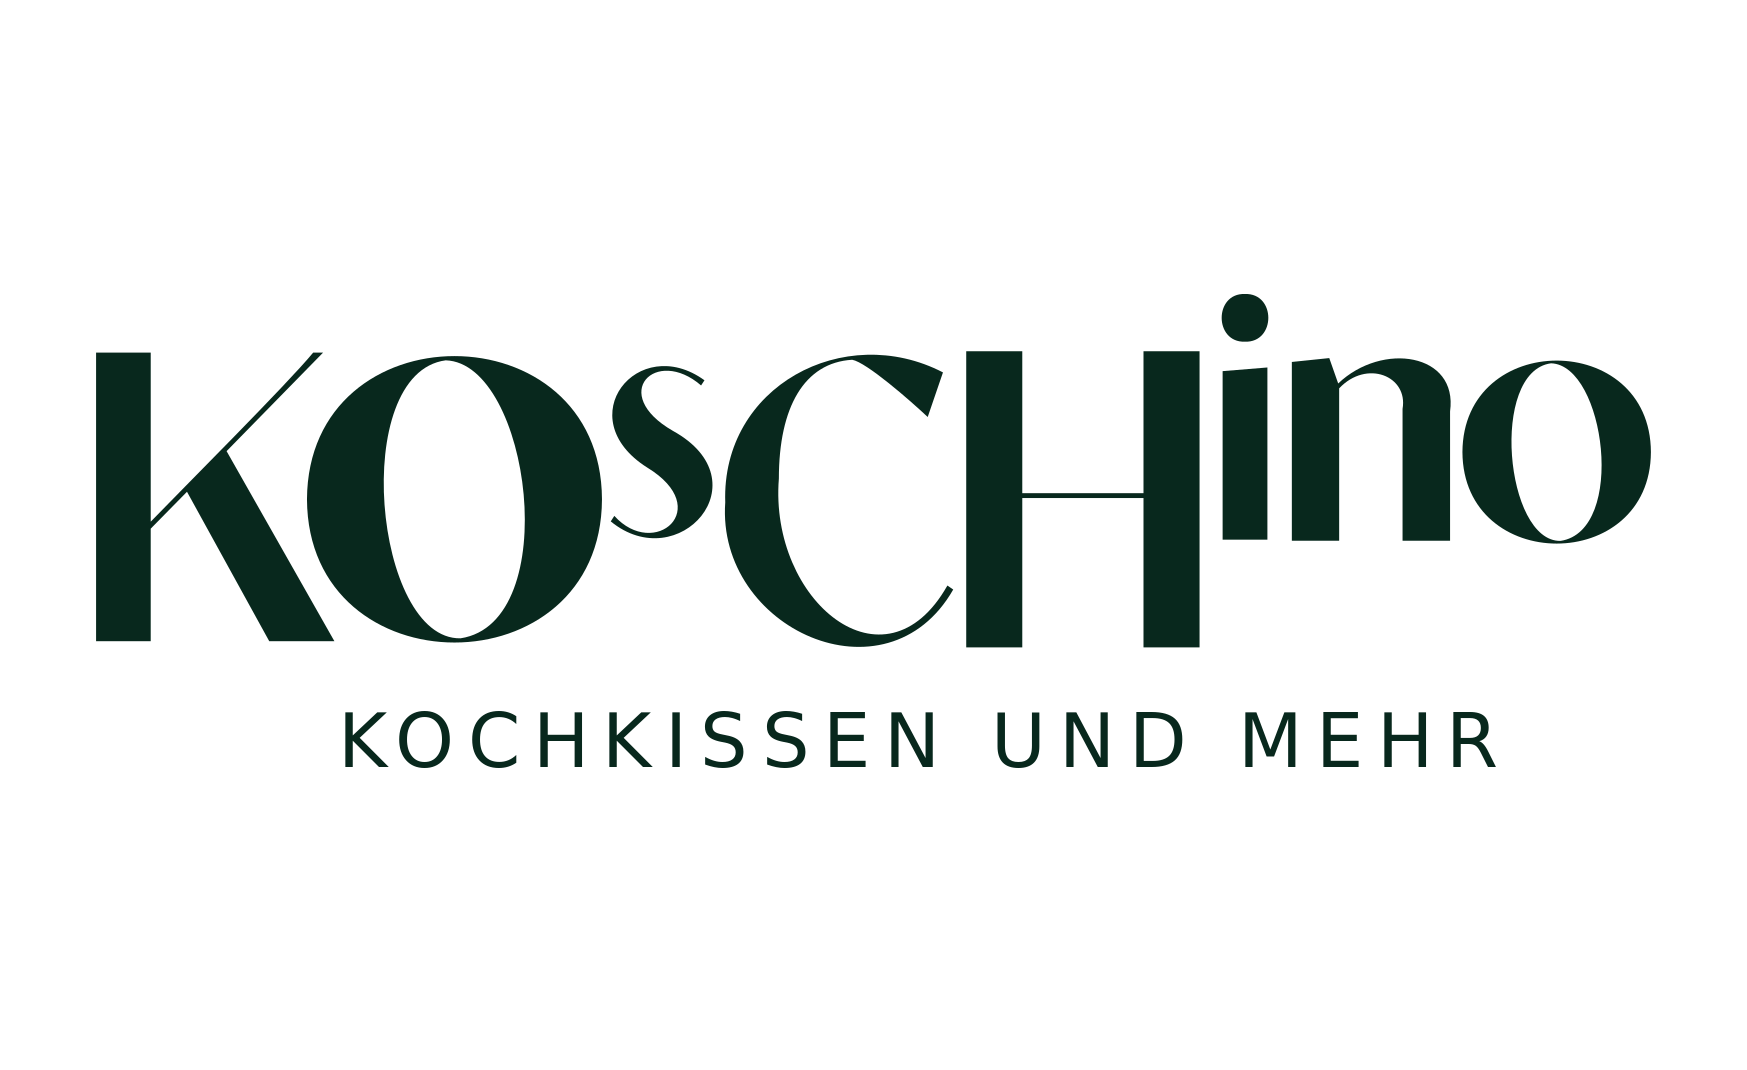 Koschino-Kochkissen - Online-Shop - Logo